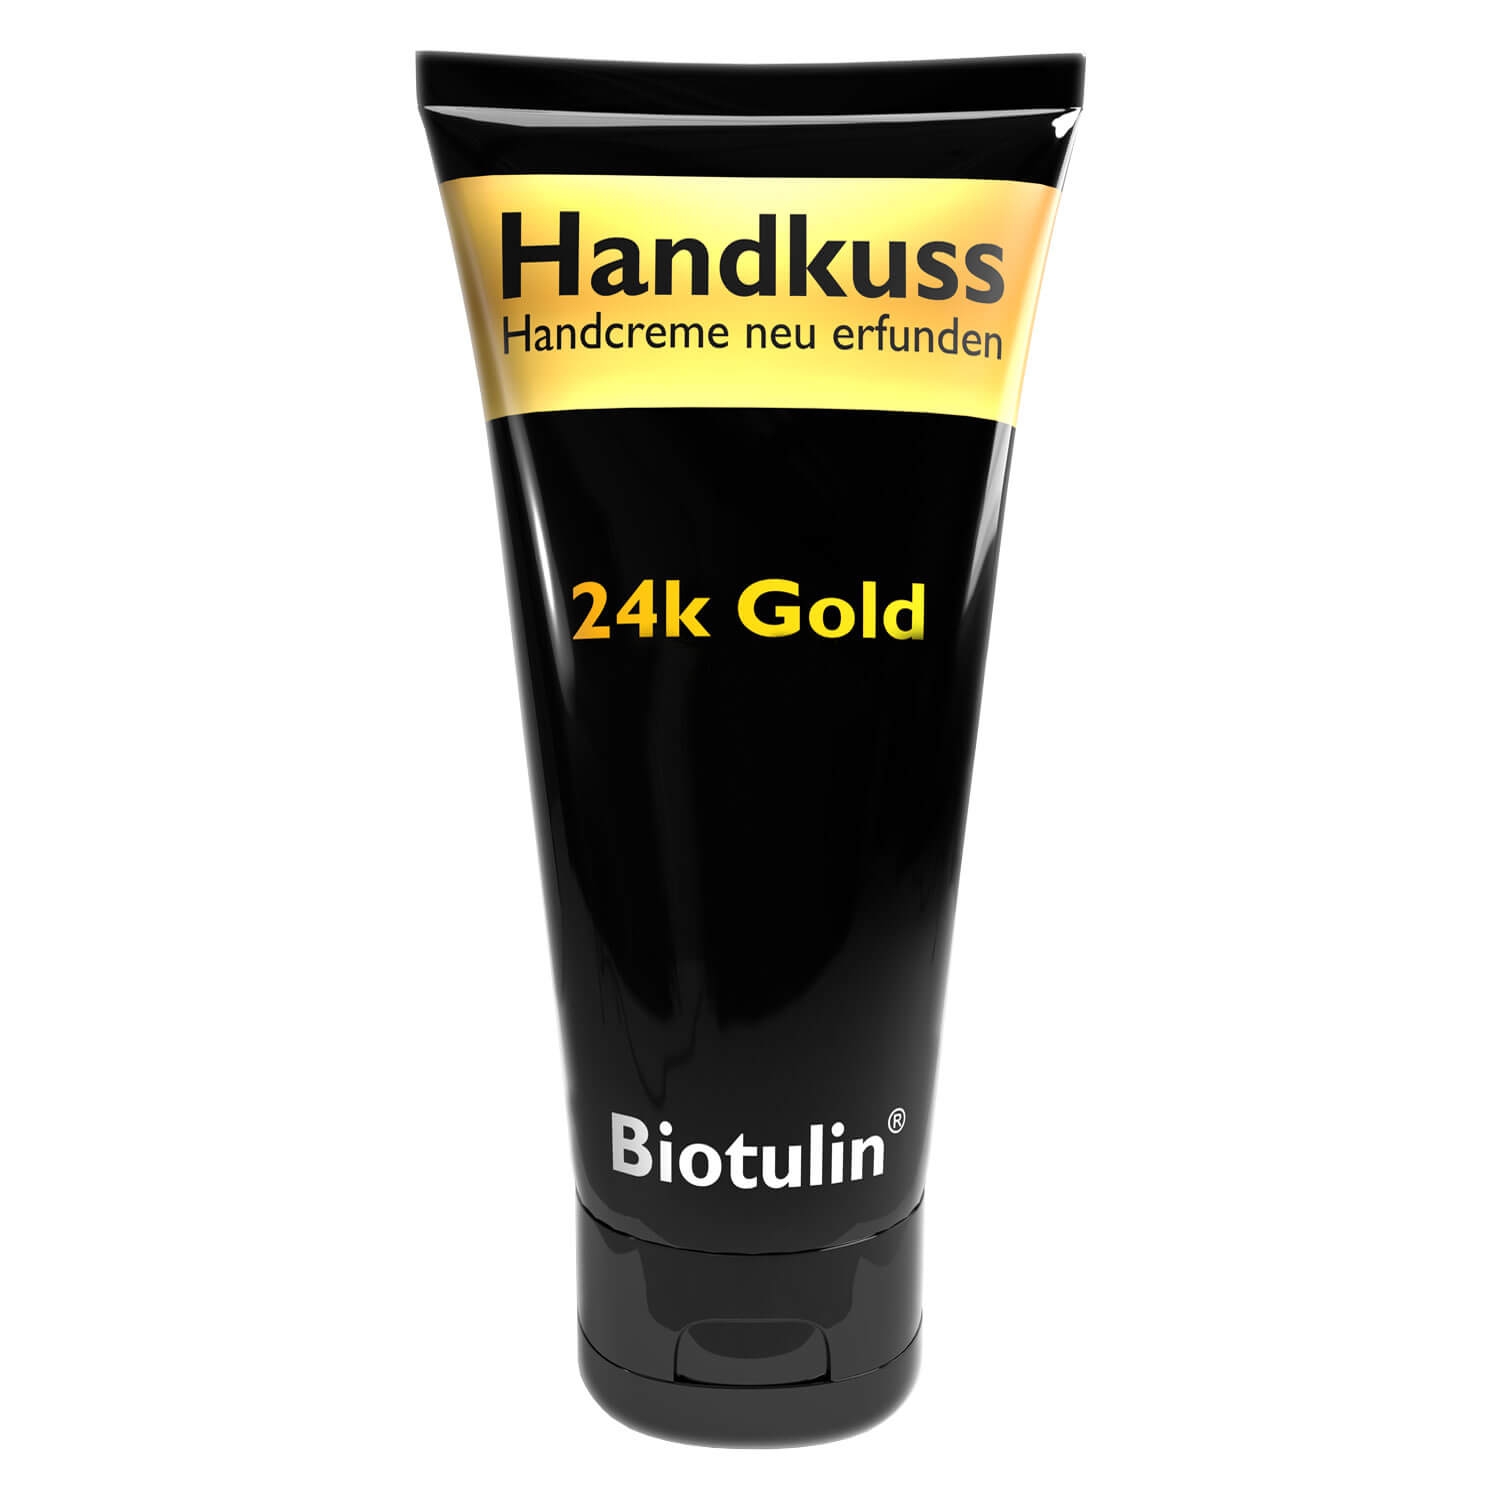 Product image from Biotulin - Handkuss